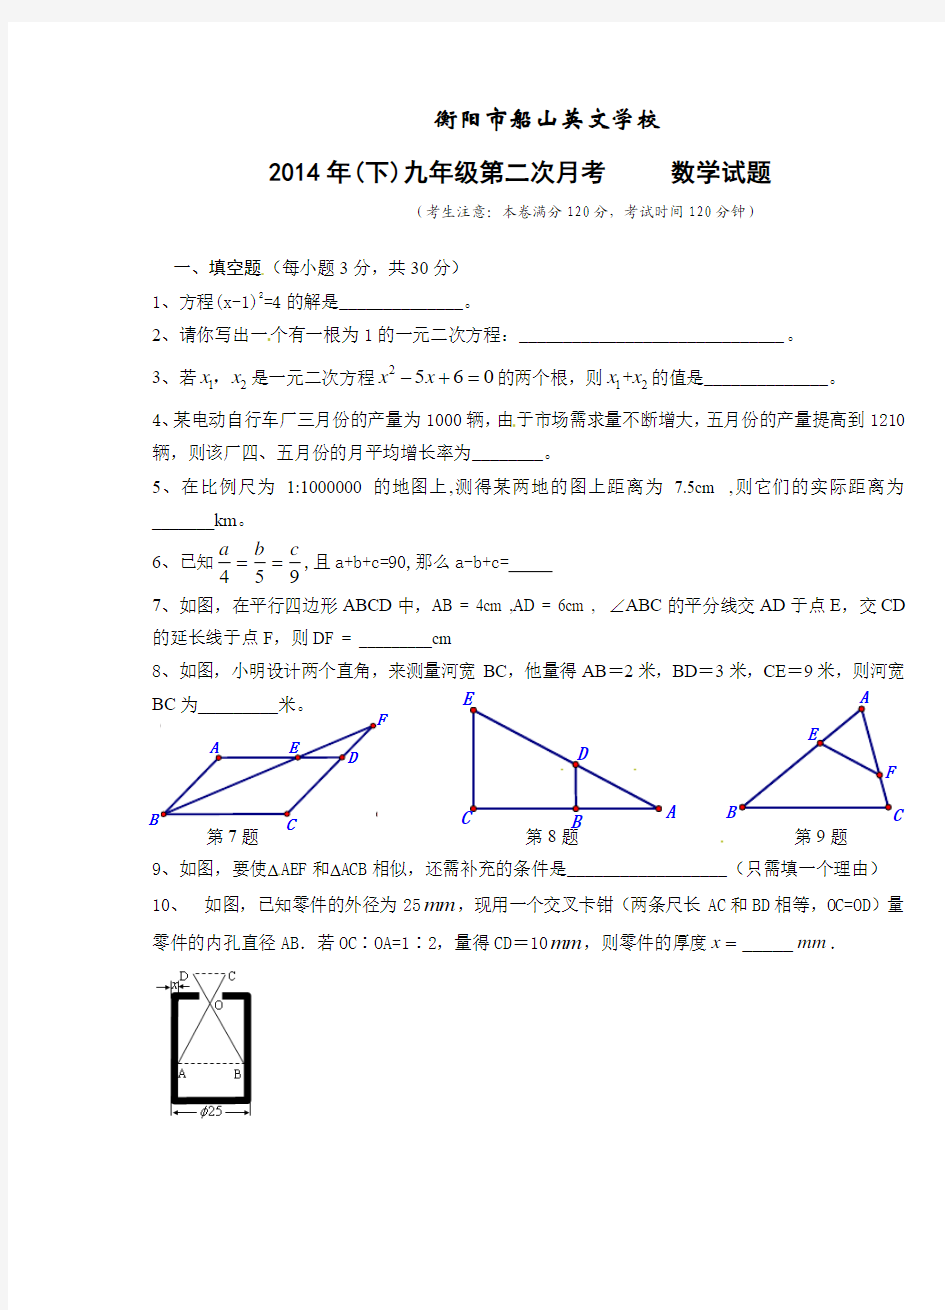 R【解析版】湖南省衡阳市船山英文学校2015届九年级上第二次月考数学试题